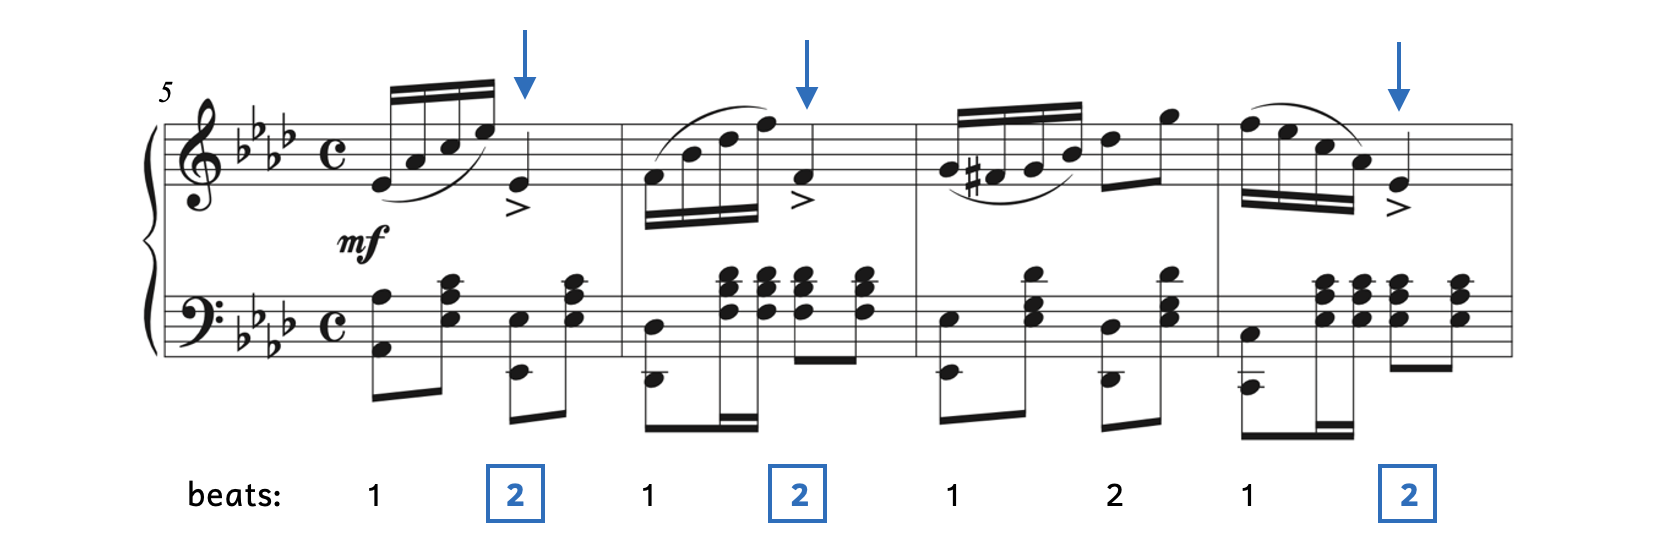 Syncopations: Guerreiro, Bôas Festas, op. 12 Arrows show where syncopations occur.